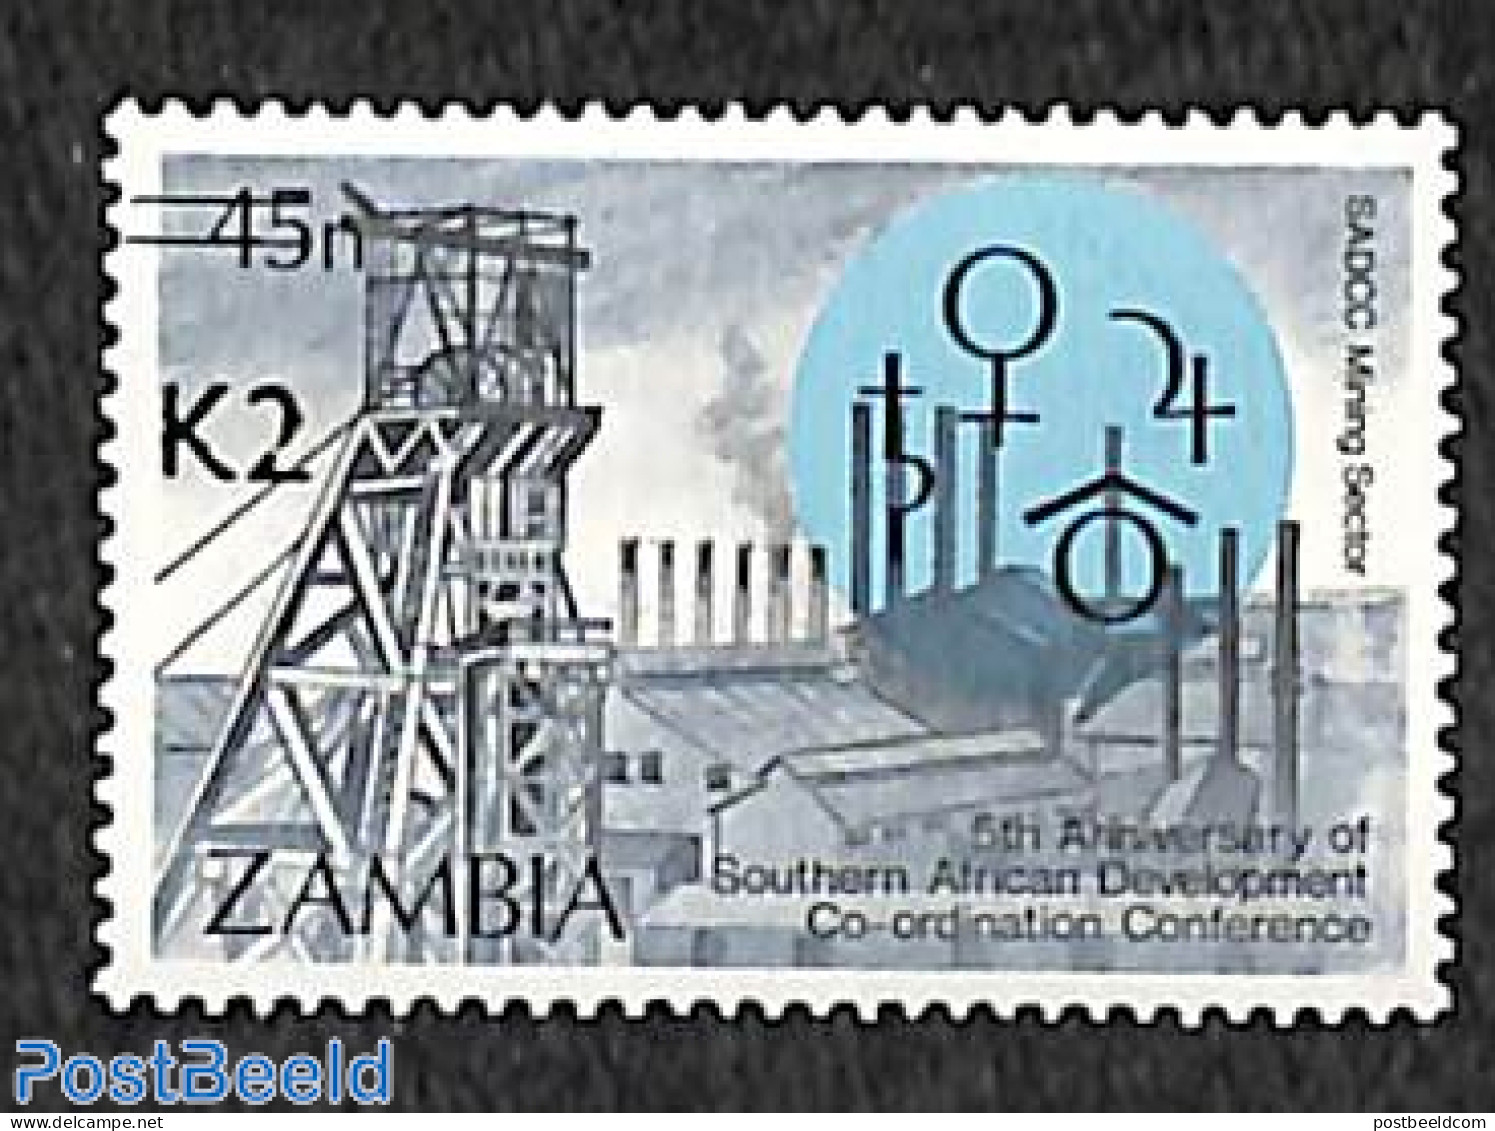 Zambia 1991 SADCC, Mining 2k On 45n 1v, Mint NH, Science - Mining - Zambia (1965-...)